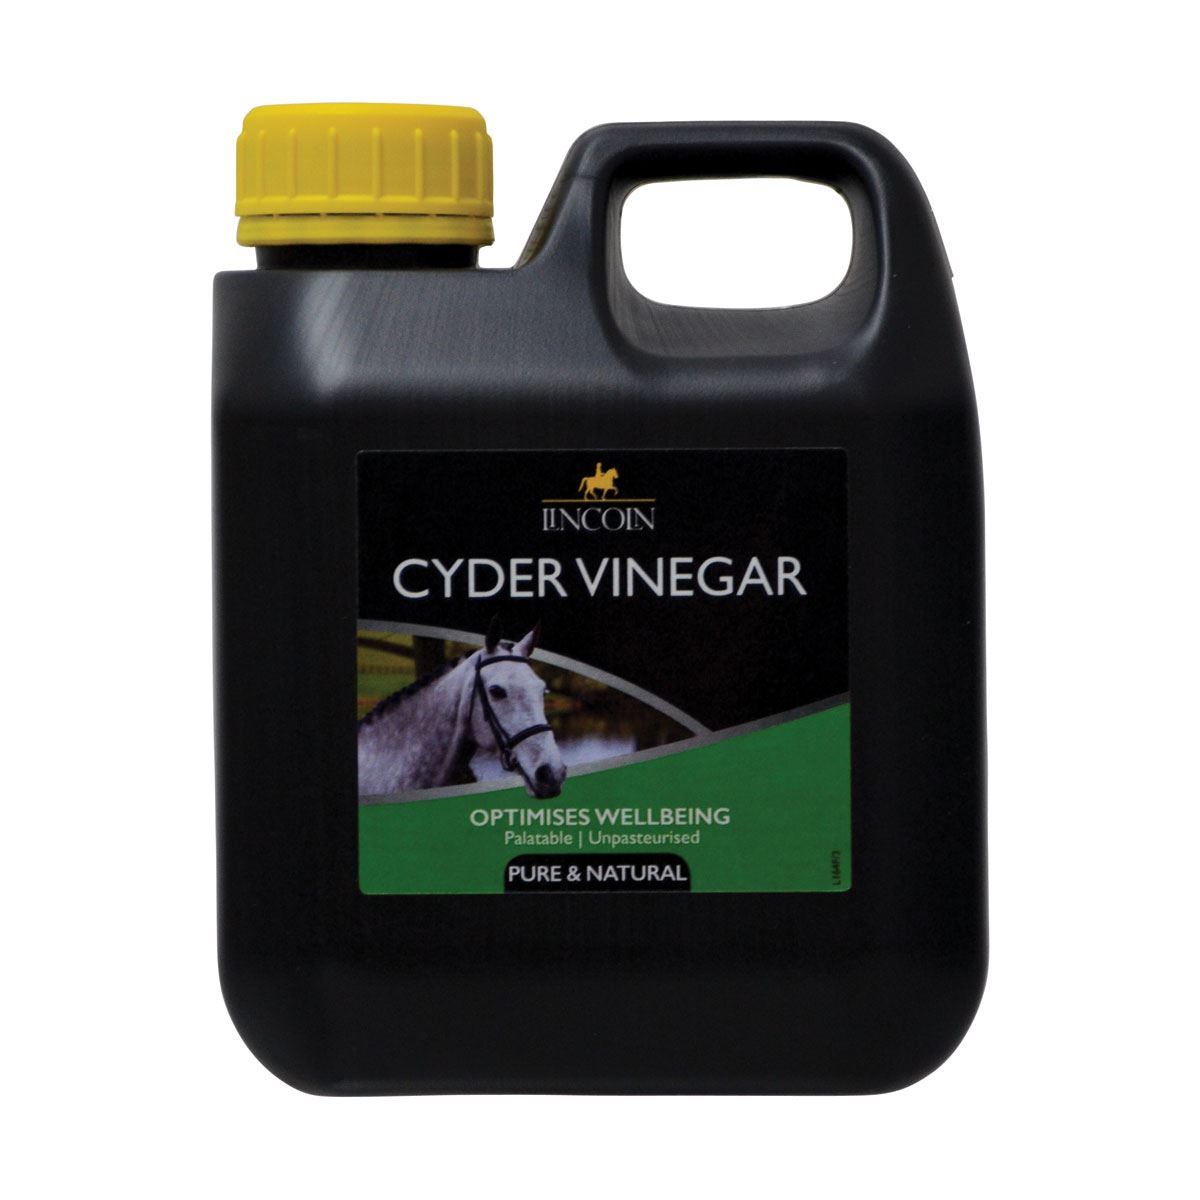 Lincoln Cyder Vinegar - Just Horse Riders